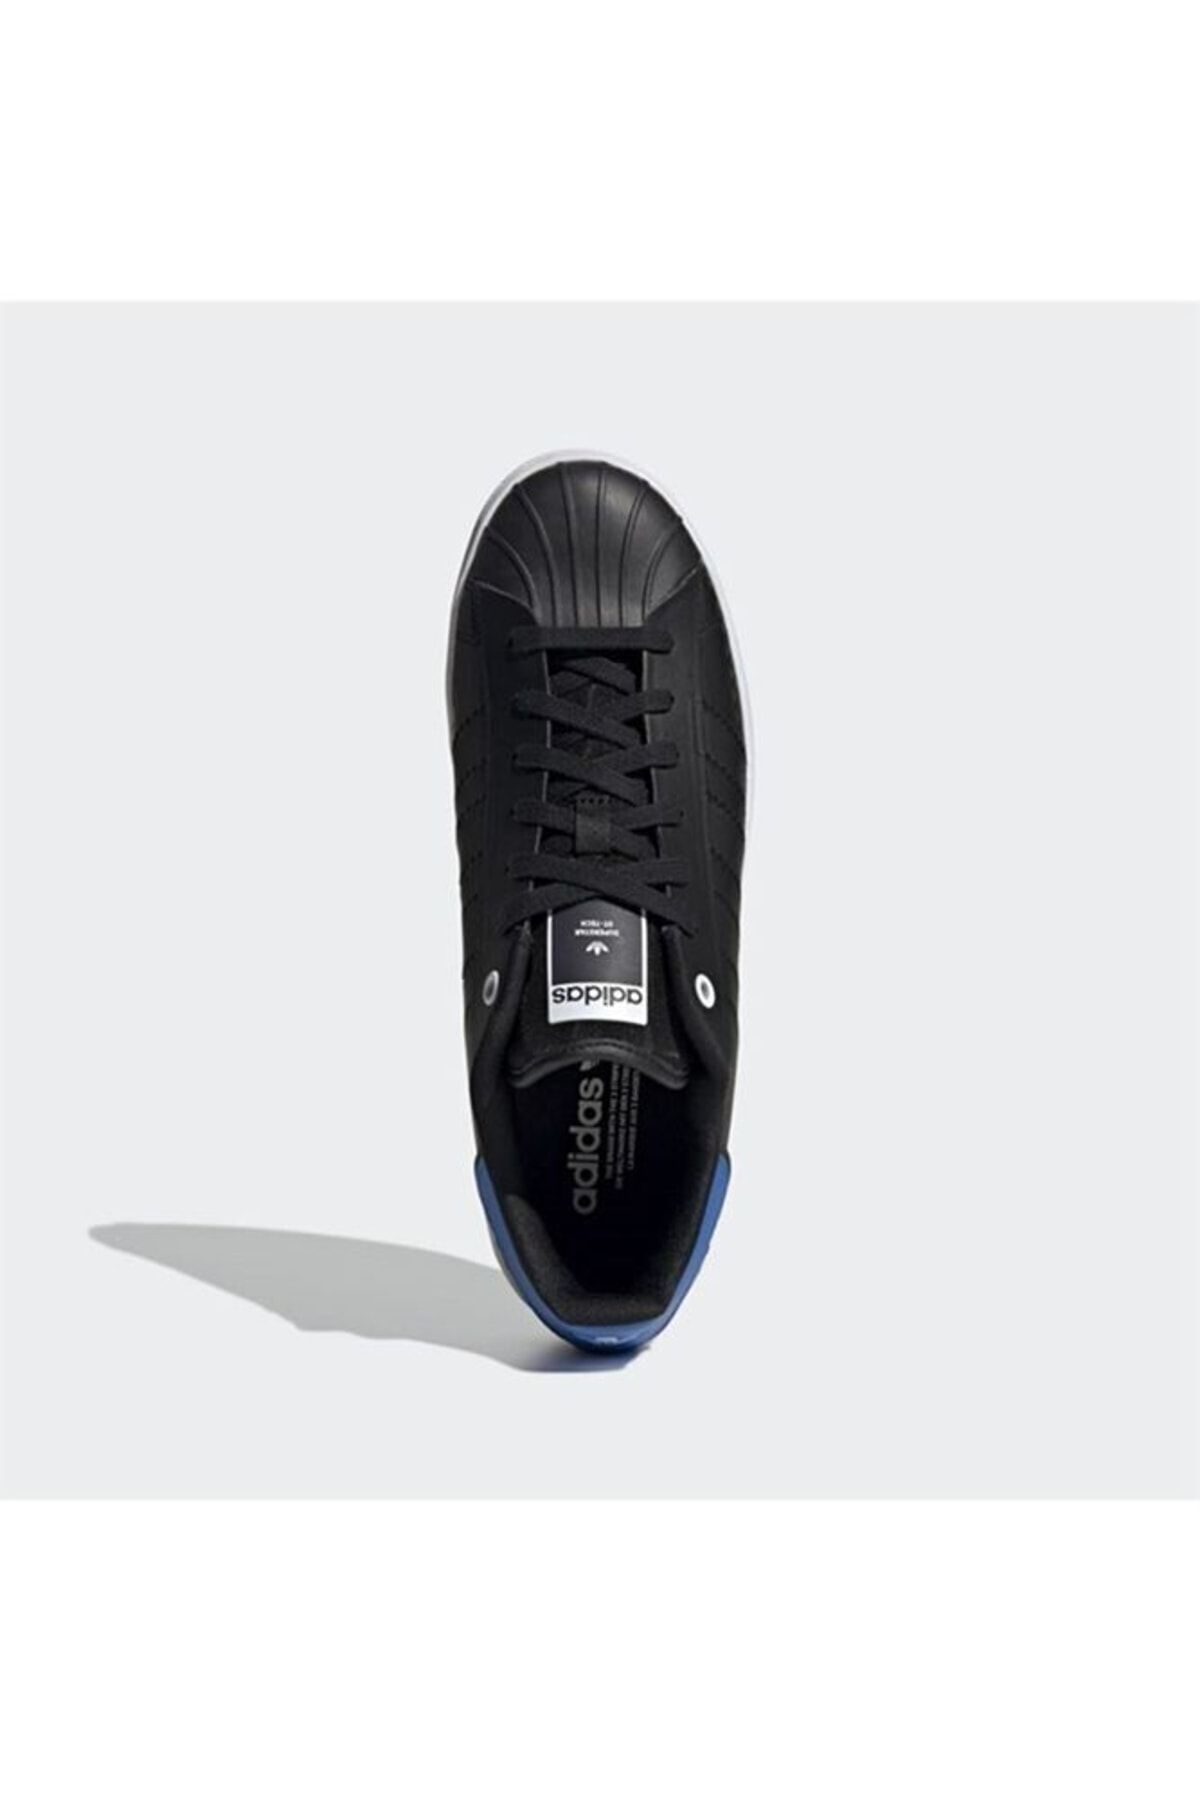 adidas کفش کتانی زنانه اسپرت مدل superstar ot tech